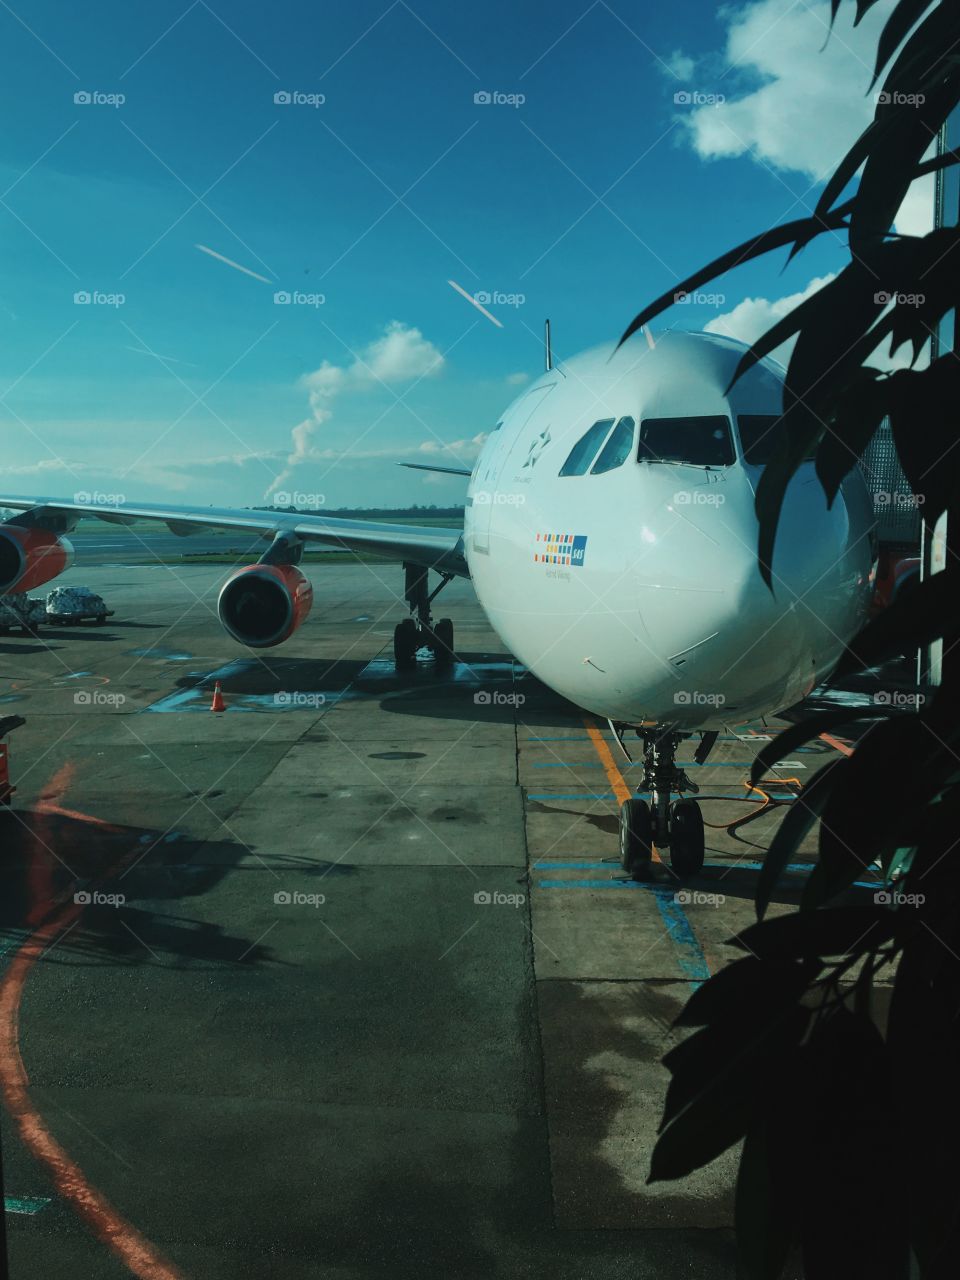 Airplane, Aircraft, Airport, Transportation System, Flight